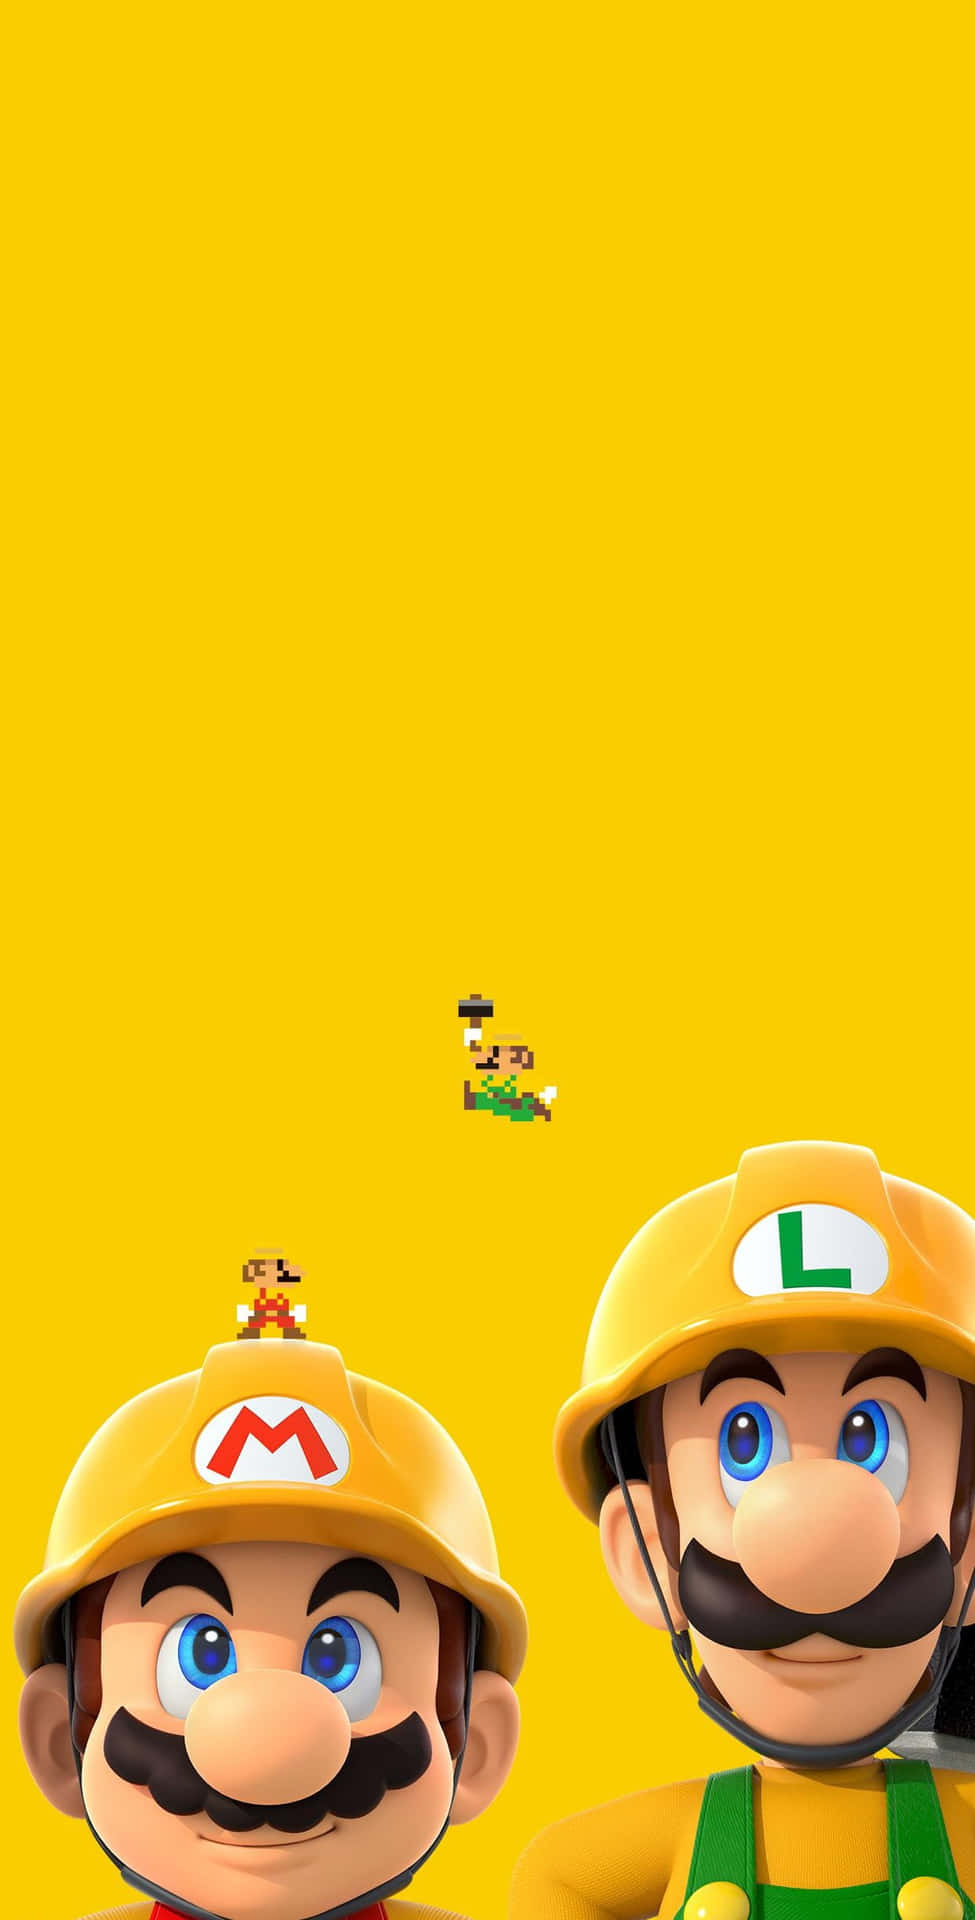 Mario and Luigi embark on an adventure in Super Mario Bros 3 Wallpaper